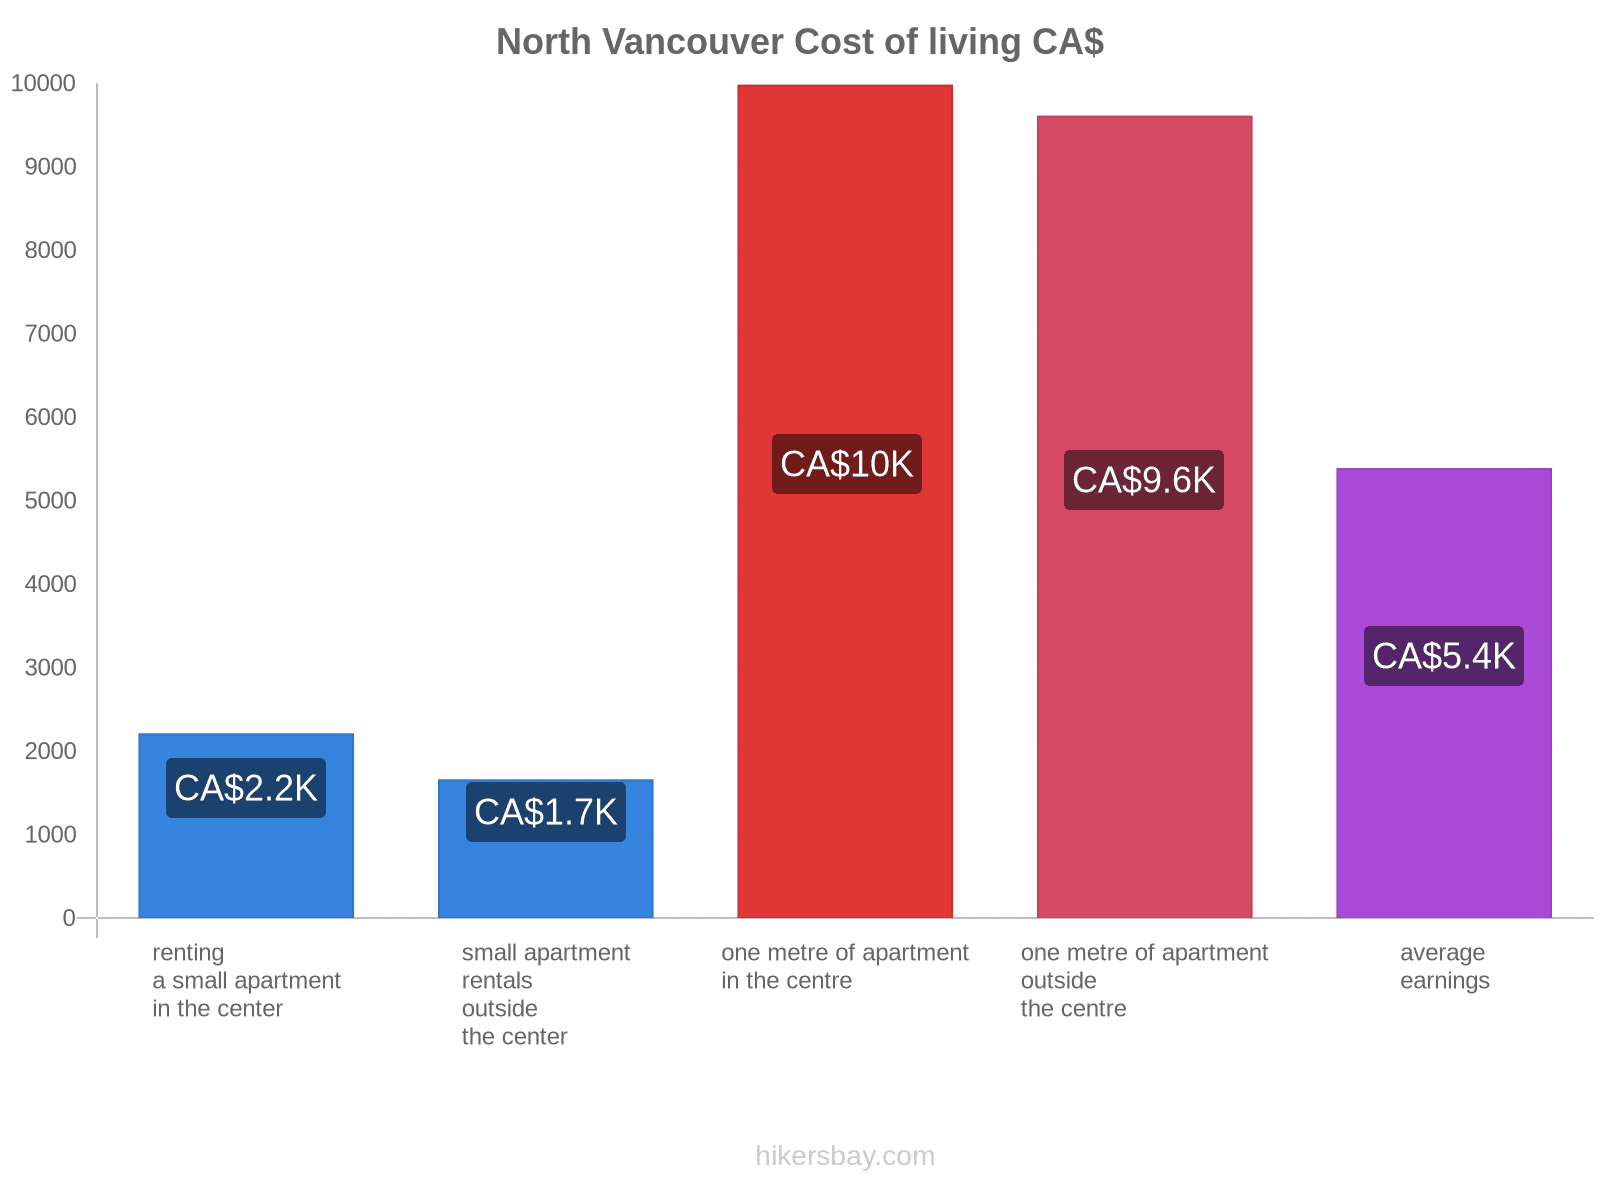 North Vancouver cost of living hikersbay.com